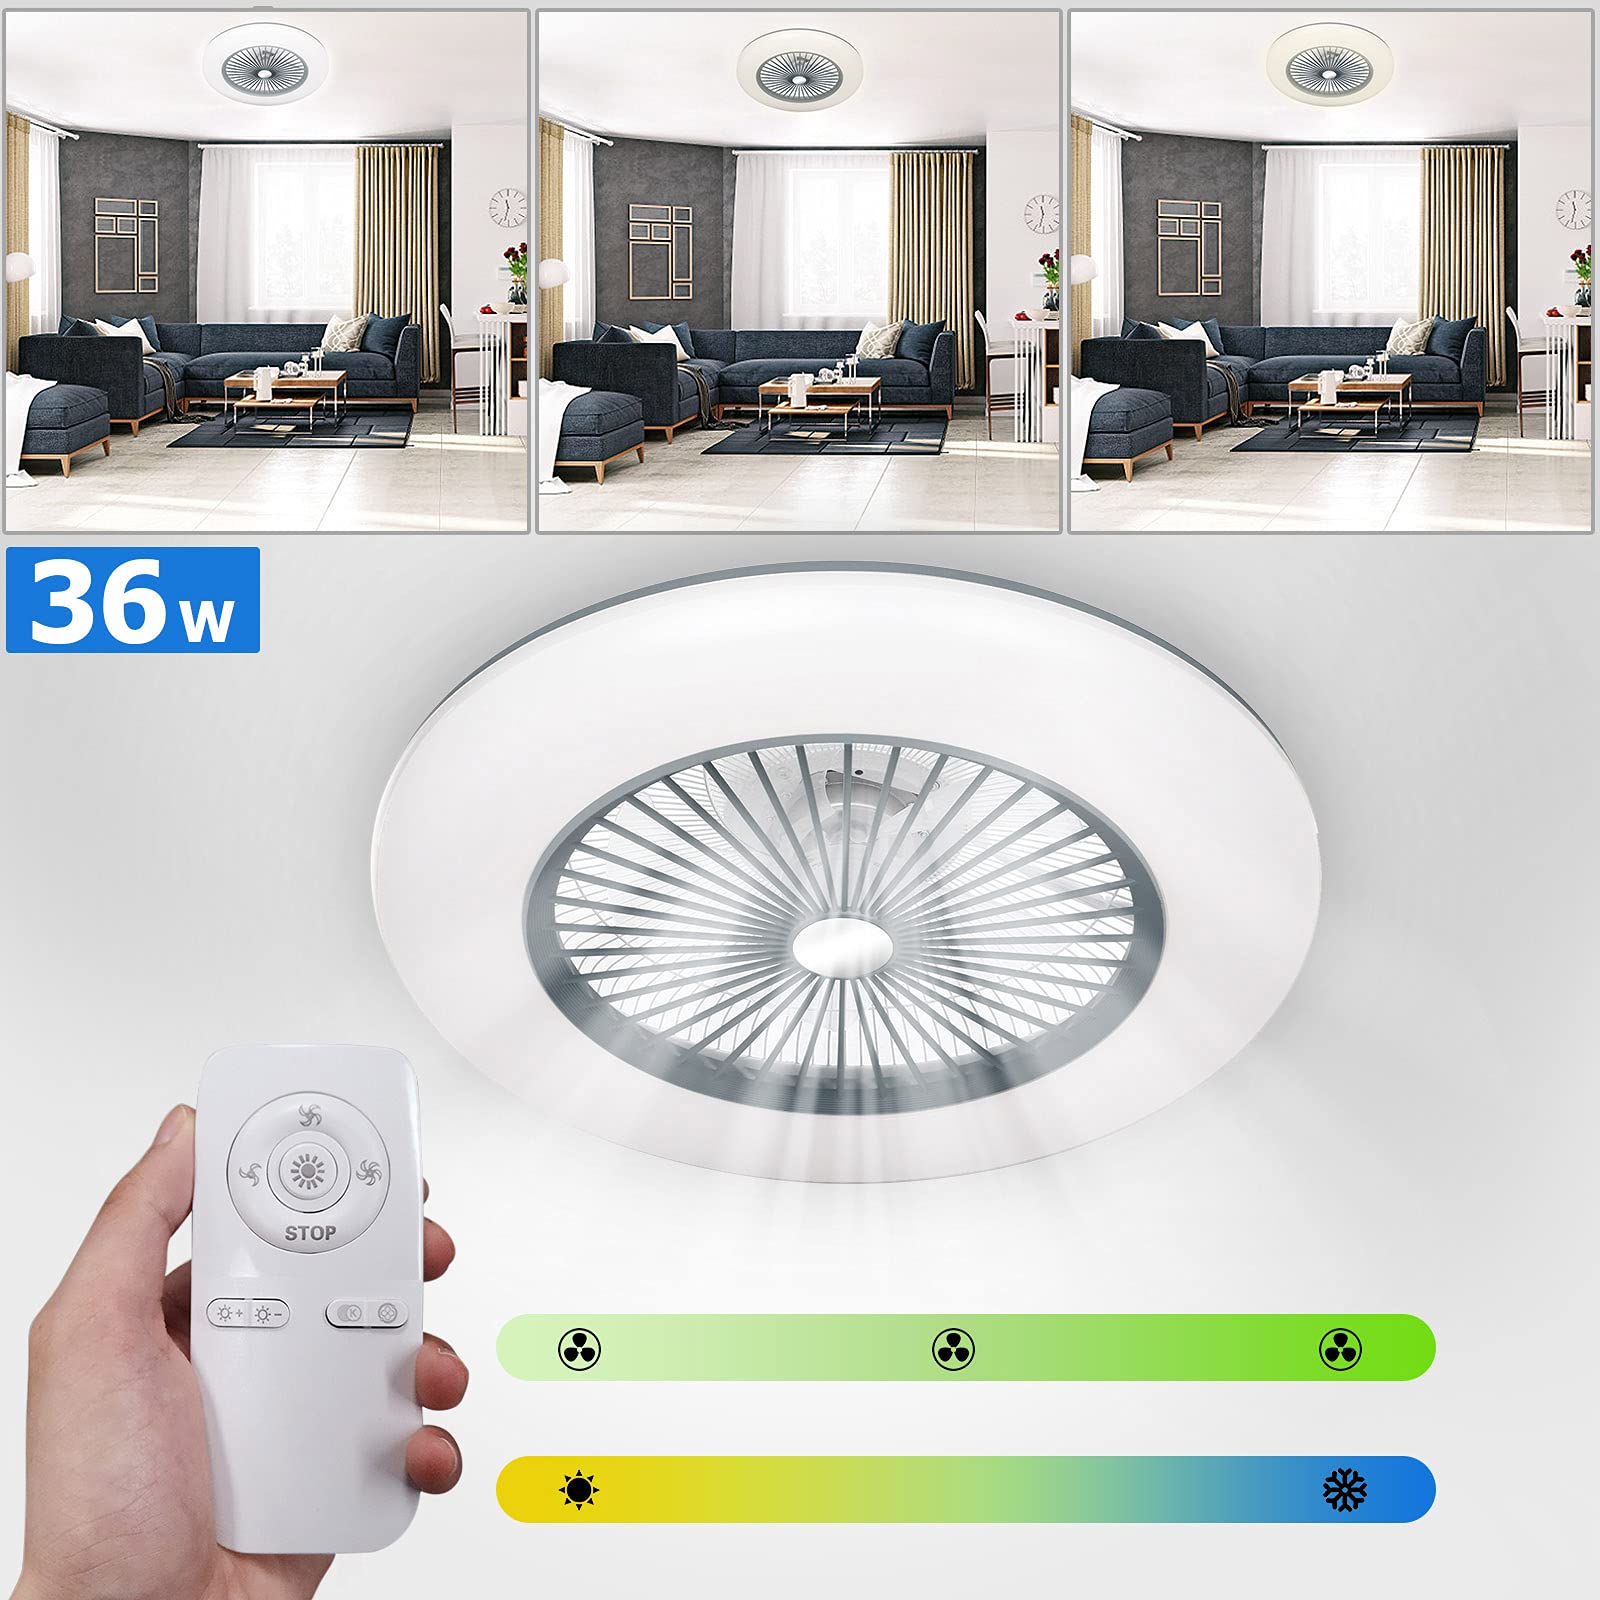 Duangu Lighted Ceiling Fan 110V-120V LED Light APP Mobile Phone Control Support Connection for Bedroom Living Room Dining Room with Remote Control